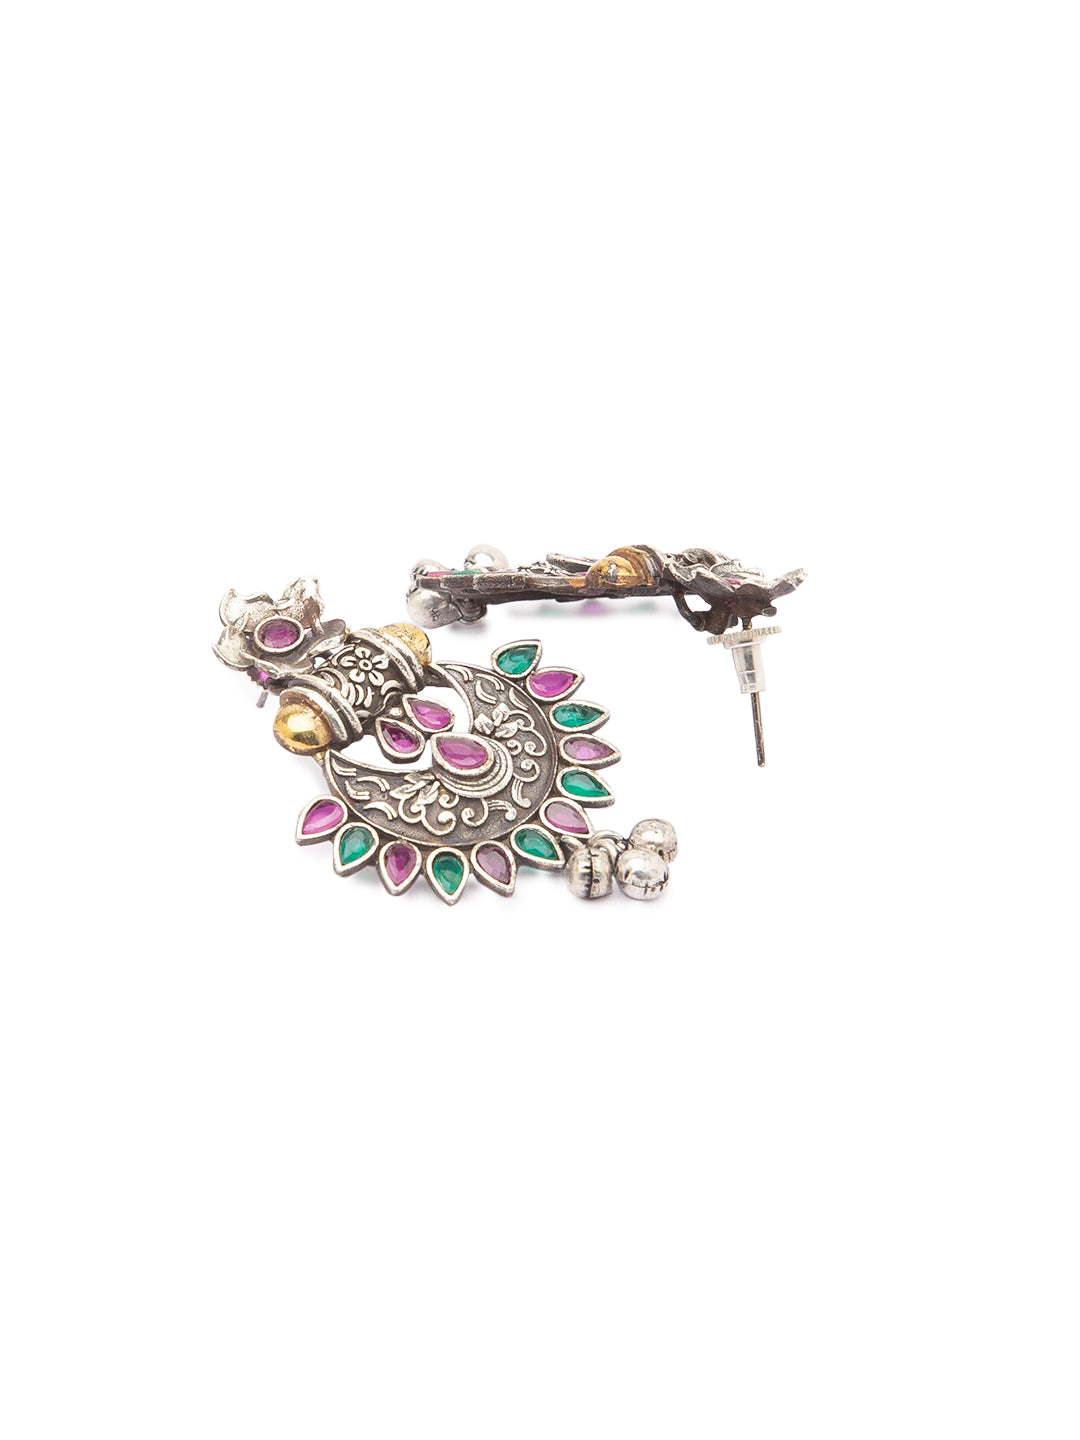 German Silver Oxidized Earrings Flower/Chandbali Design Multicolor Stones Studded Gungroo Danglers